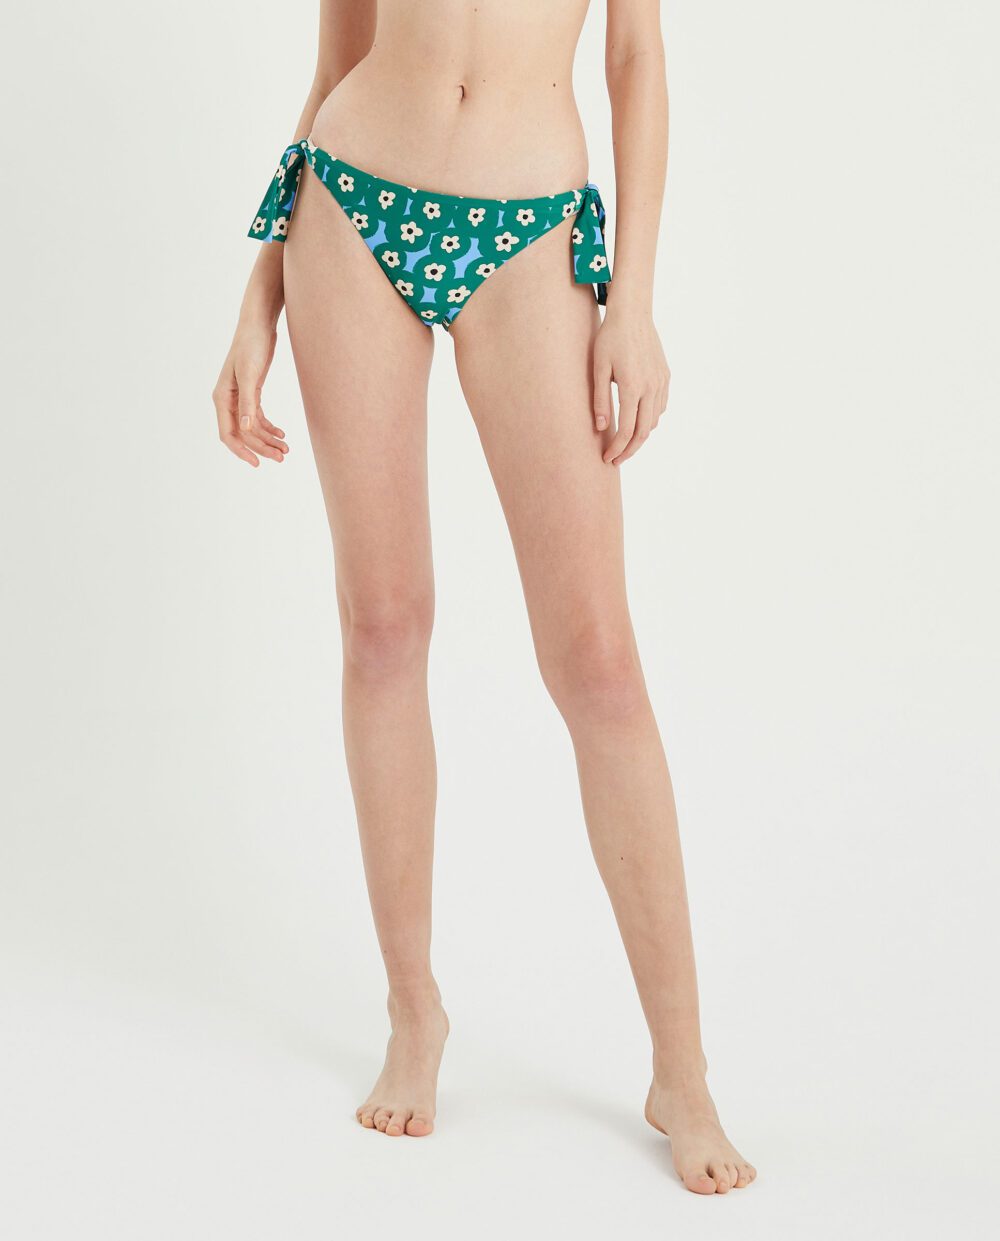 Bikini Bottom Μαγιό Με Πράσινο Φλοράλ Σχέδιο Compania Fantastica